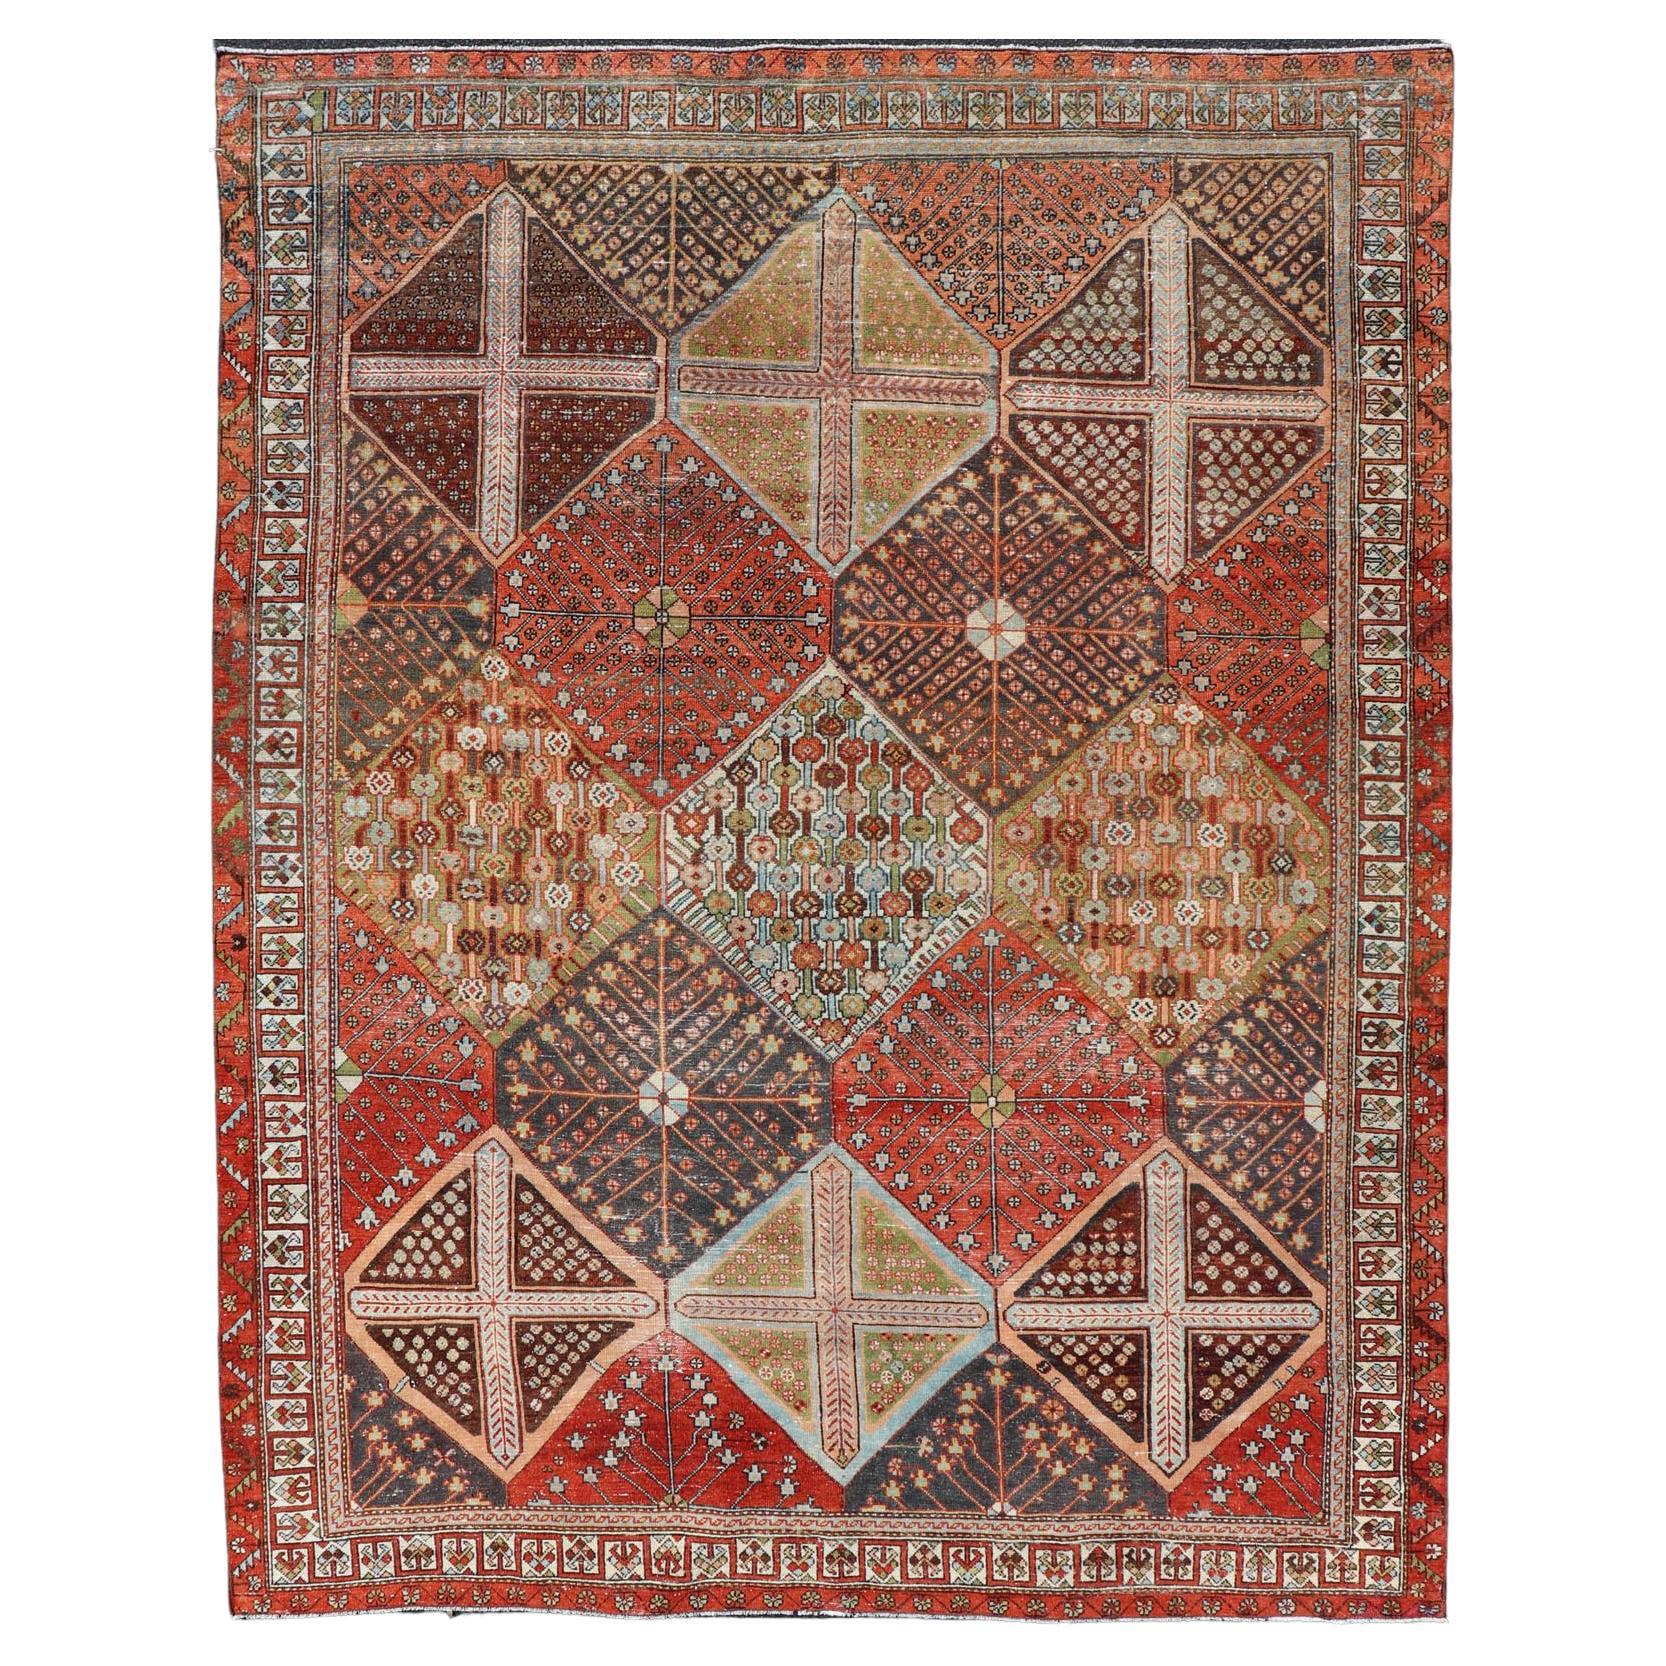 Antique Persian All-Over Large Diamond Design Bakhtiari Rug in Multi Colors